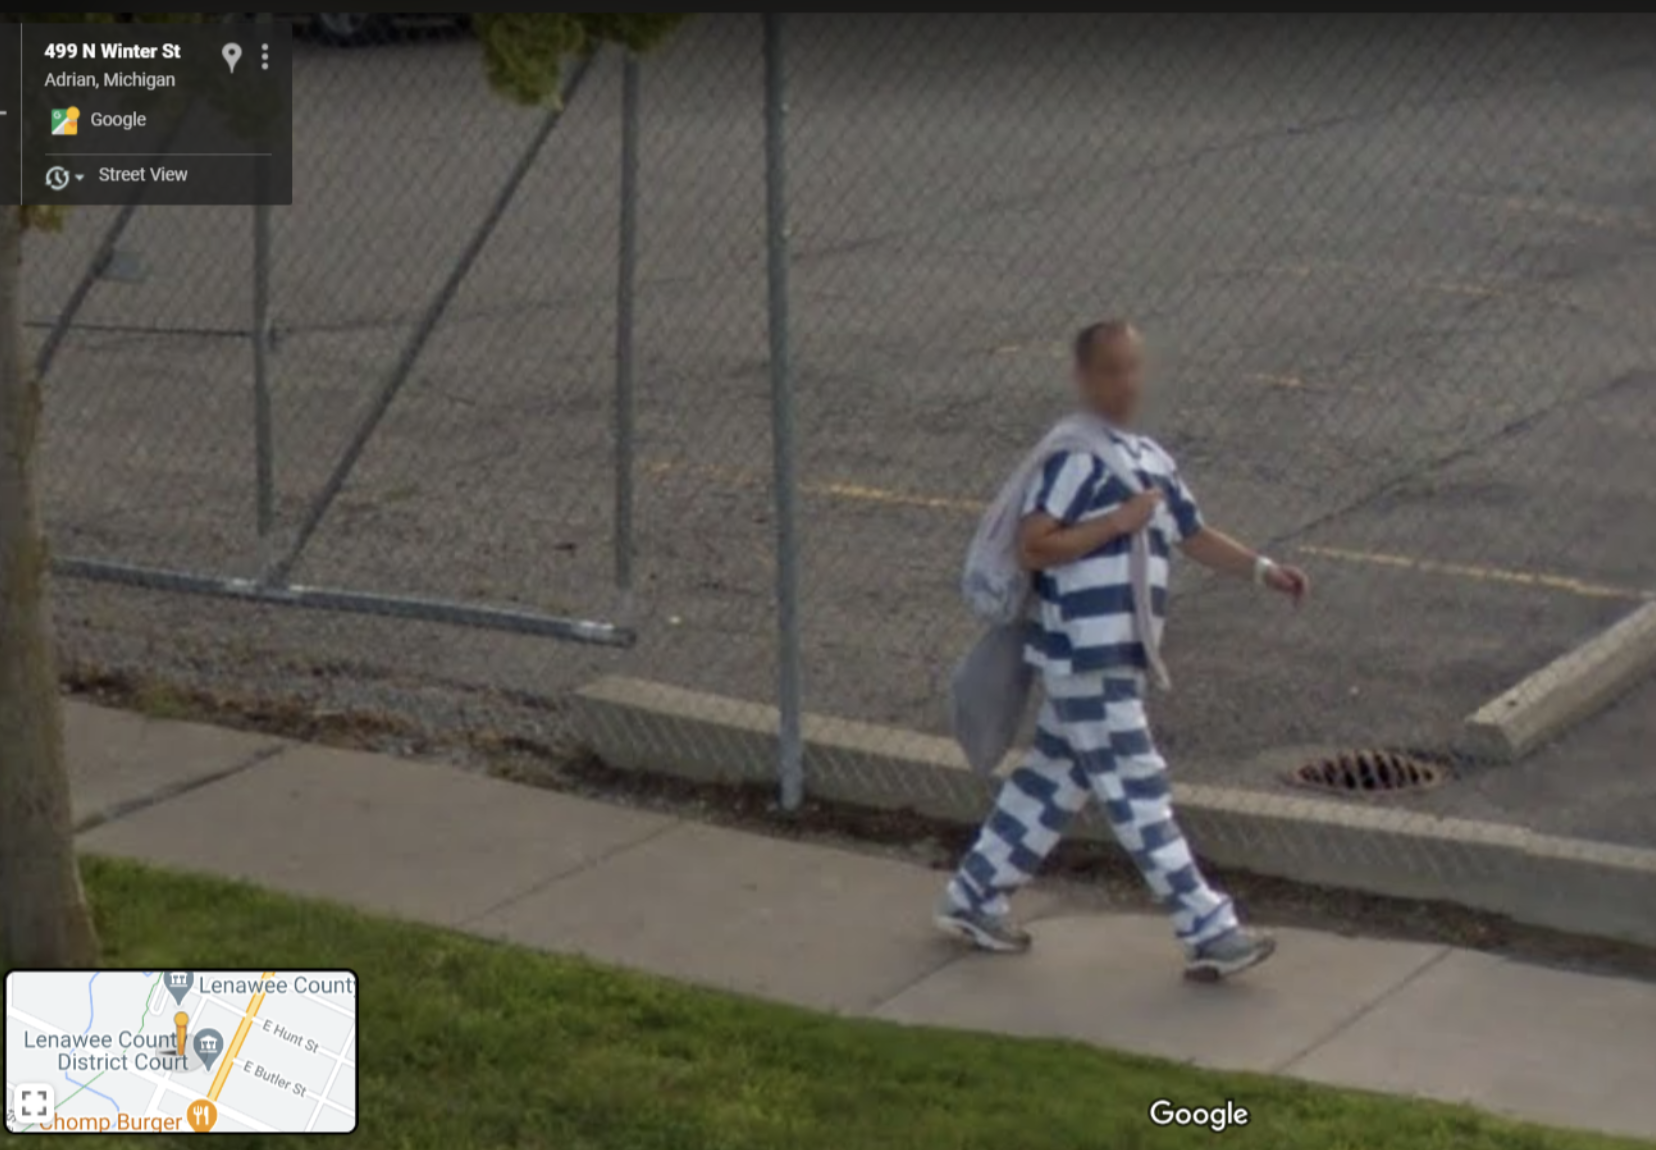 screenshot - 499 N Winter St Adrian, Michigan Google Street View Lenawee Count District Count homp Burger Lenawee Count Google